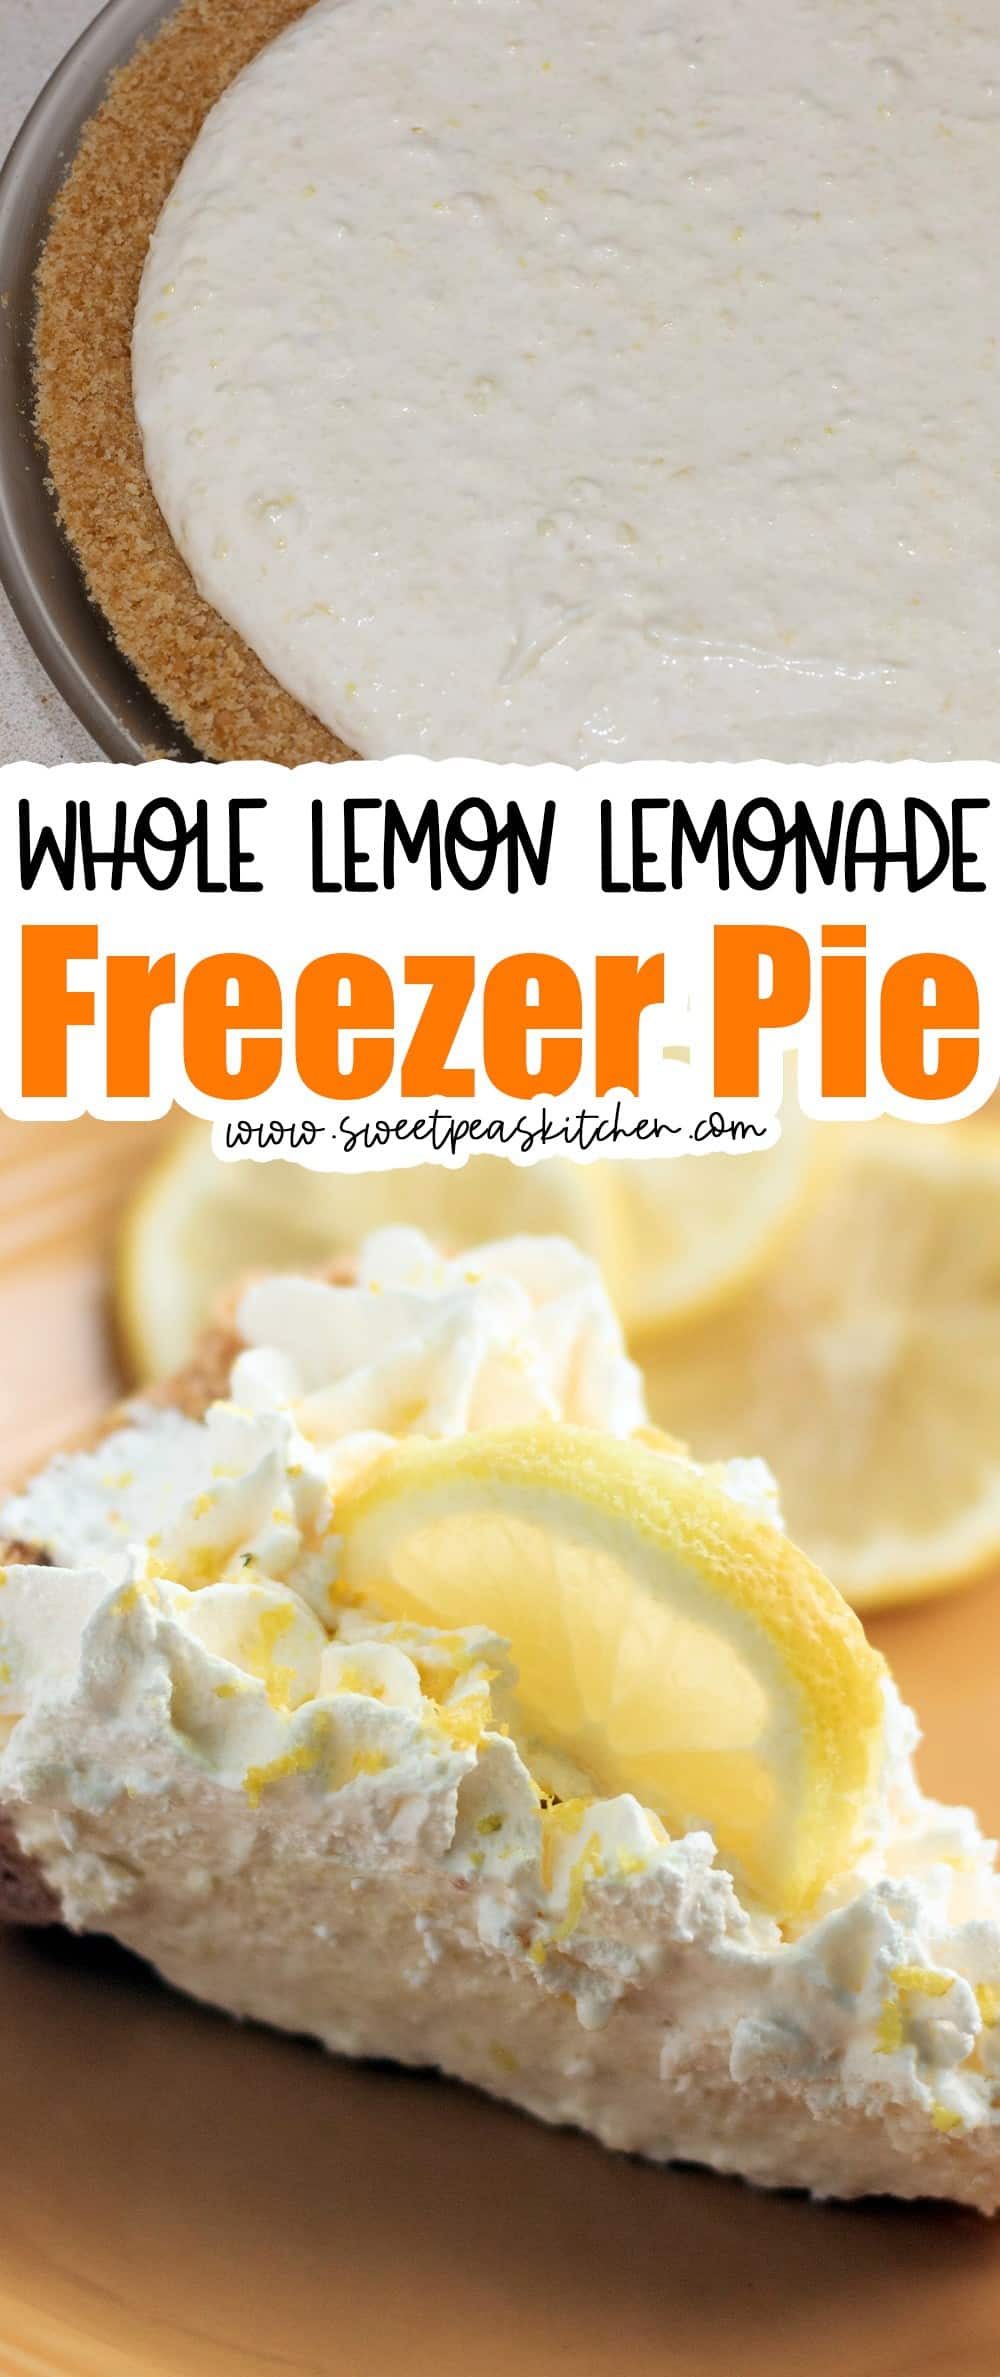 Whole Lemon Lemonade Freezer Pie